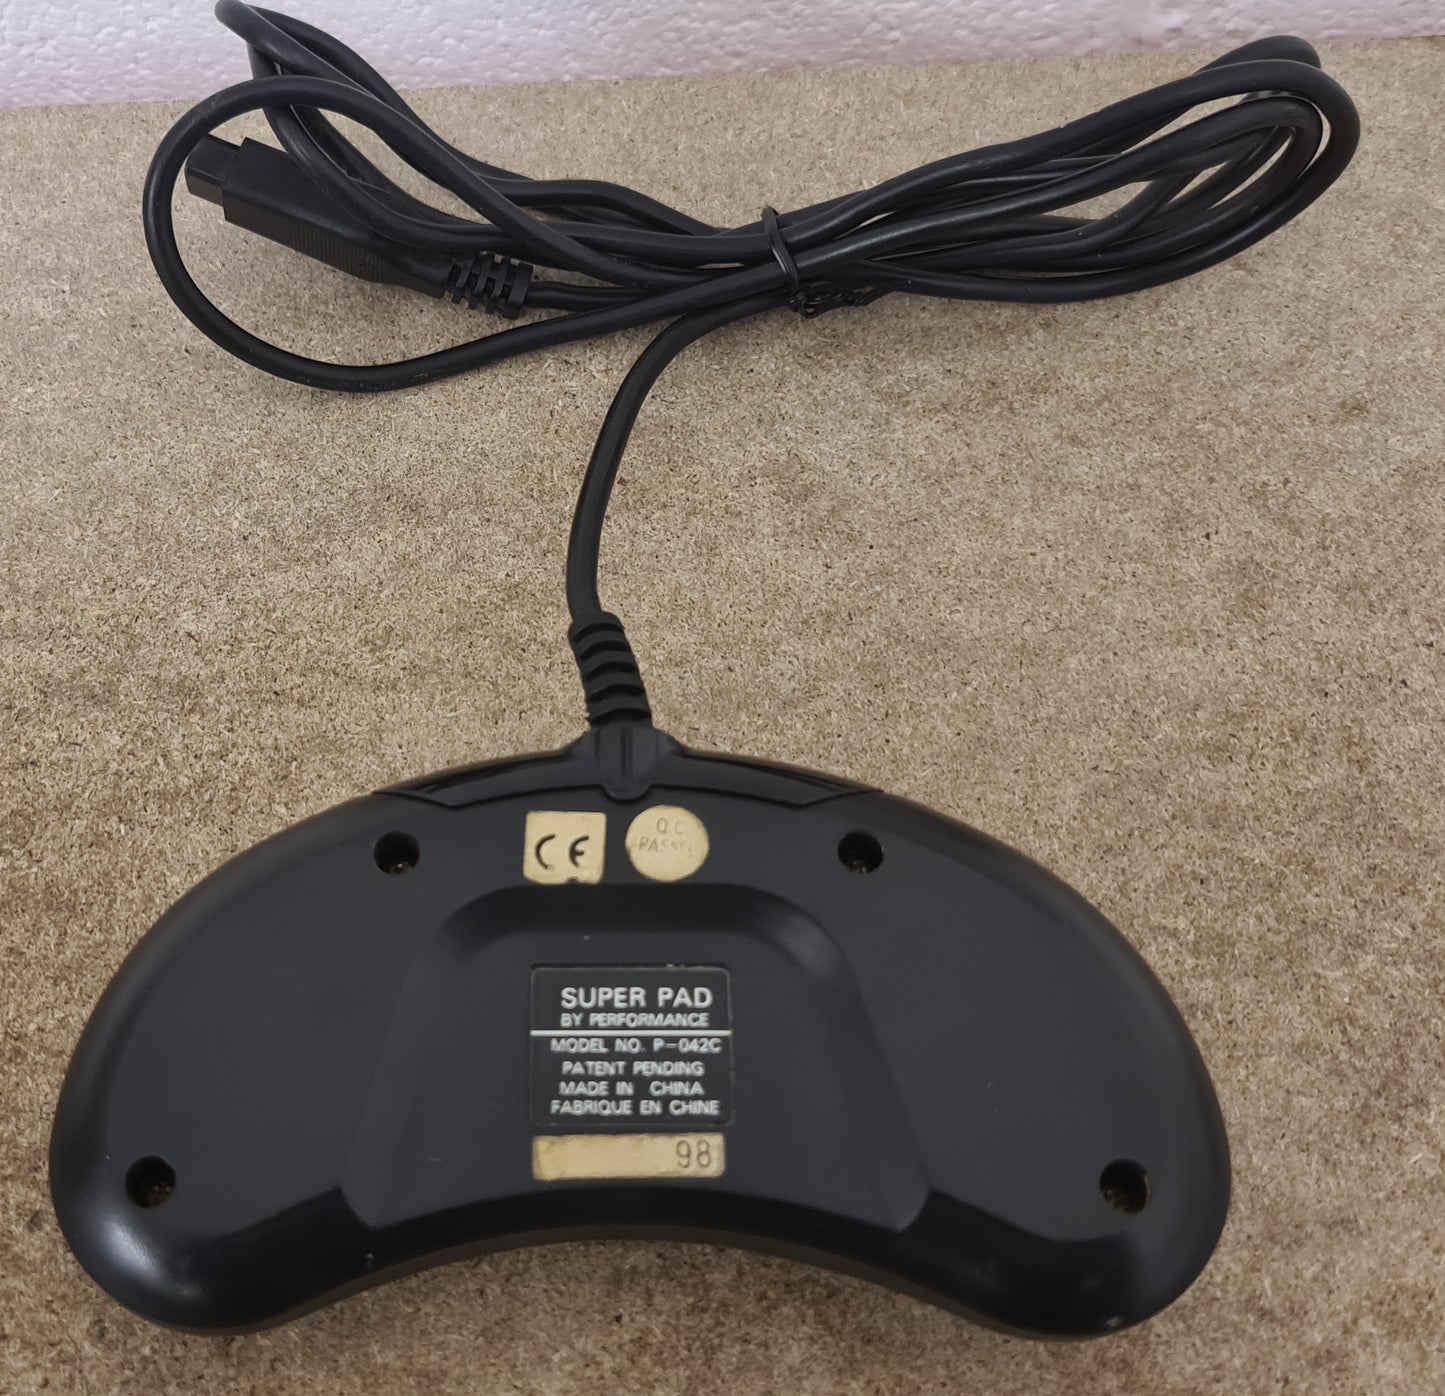 Super Pad 6 Button Controller by Performance Sega Mega Drive Accessory